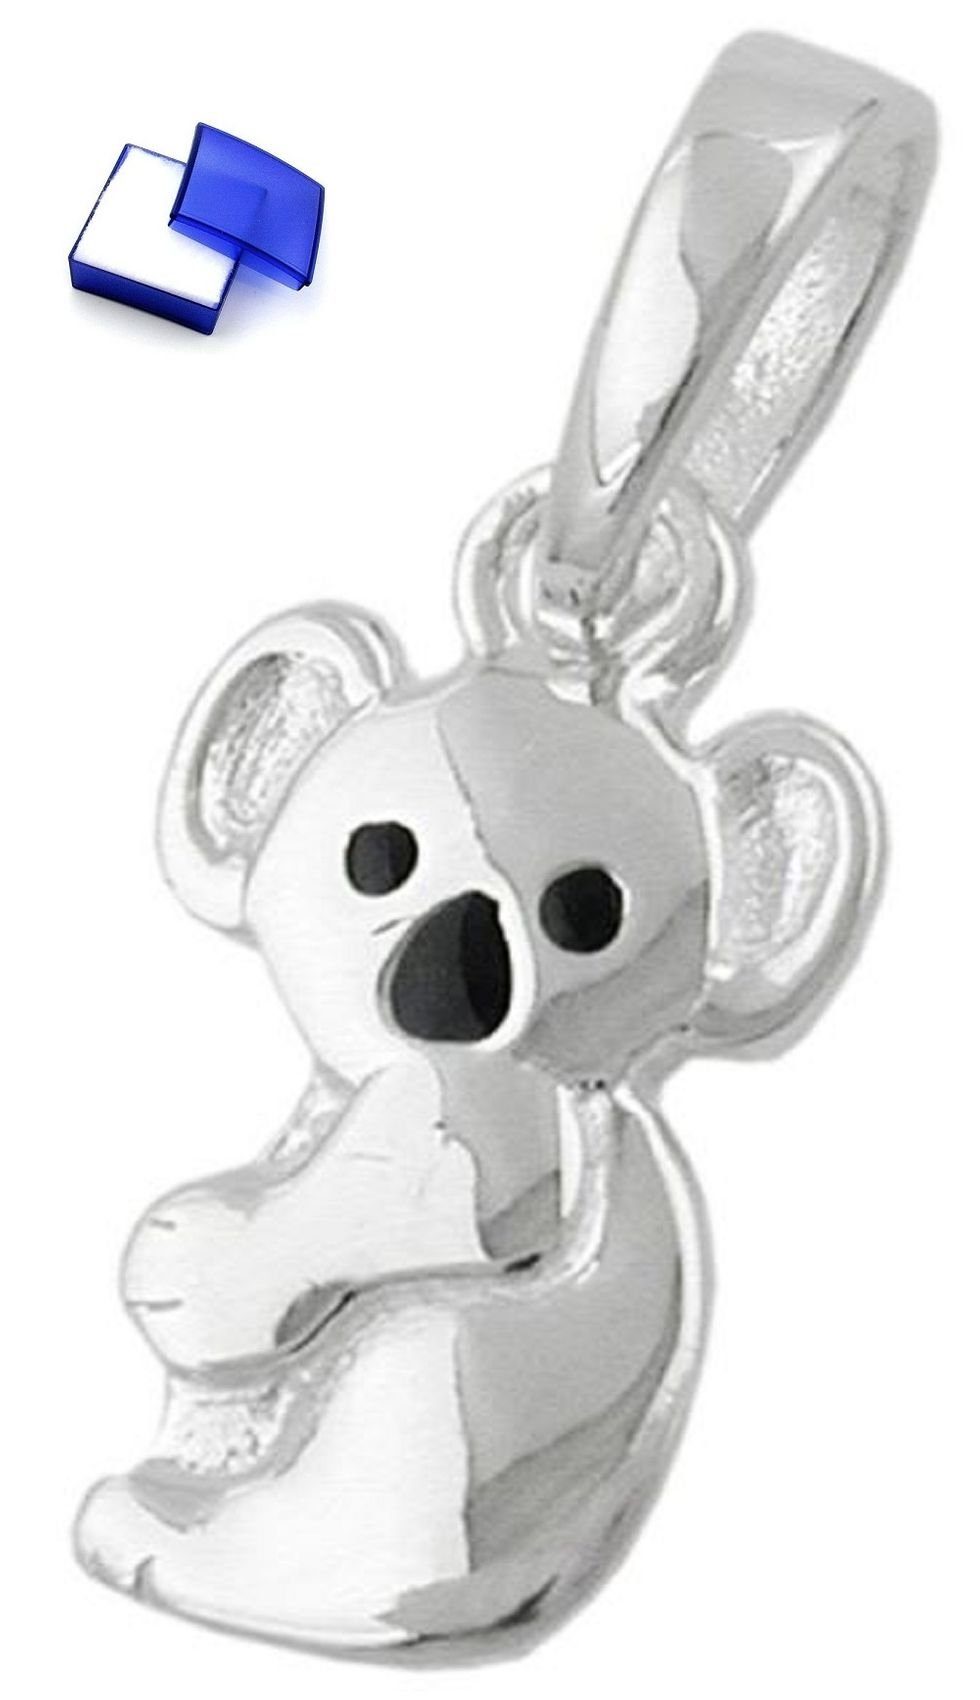 unbespielt Kettenanhänger Kettenanhänger Anhänger Koalabär 13 x 7 mm schwarz lackiert 925 Silber inkl. kleiner Schmuckbox, Silberschmuck für Kinder